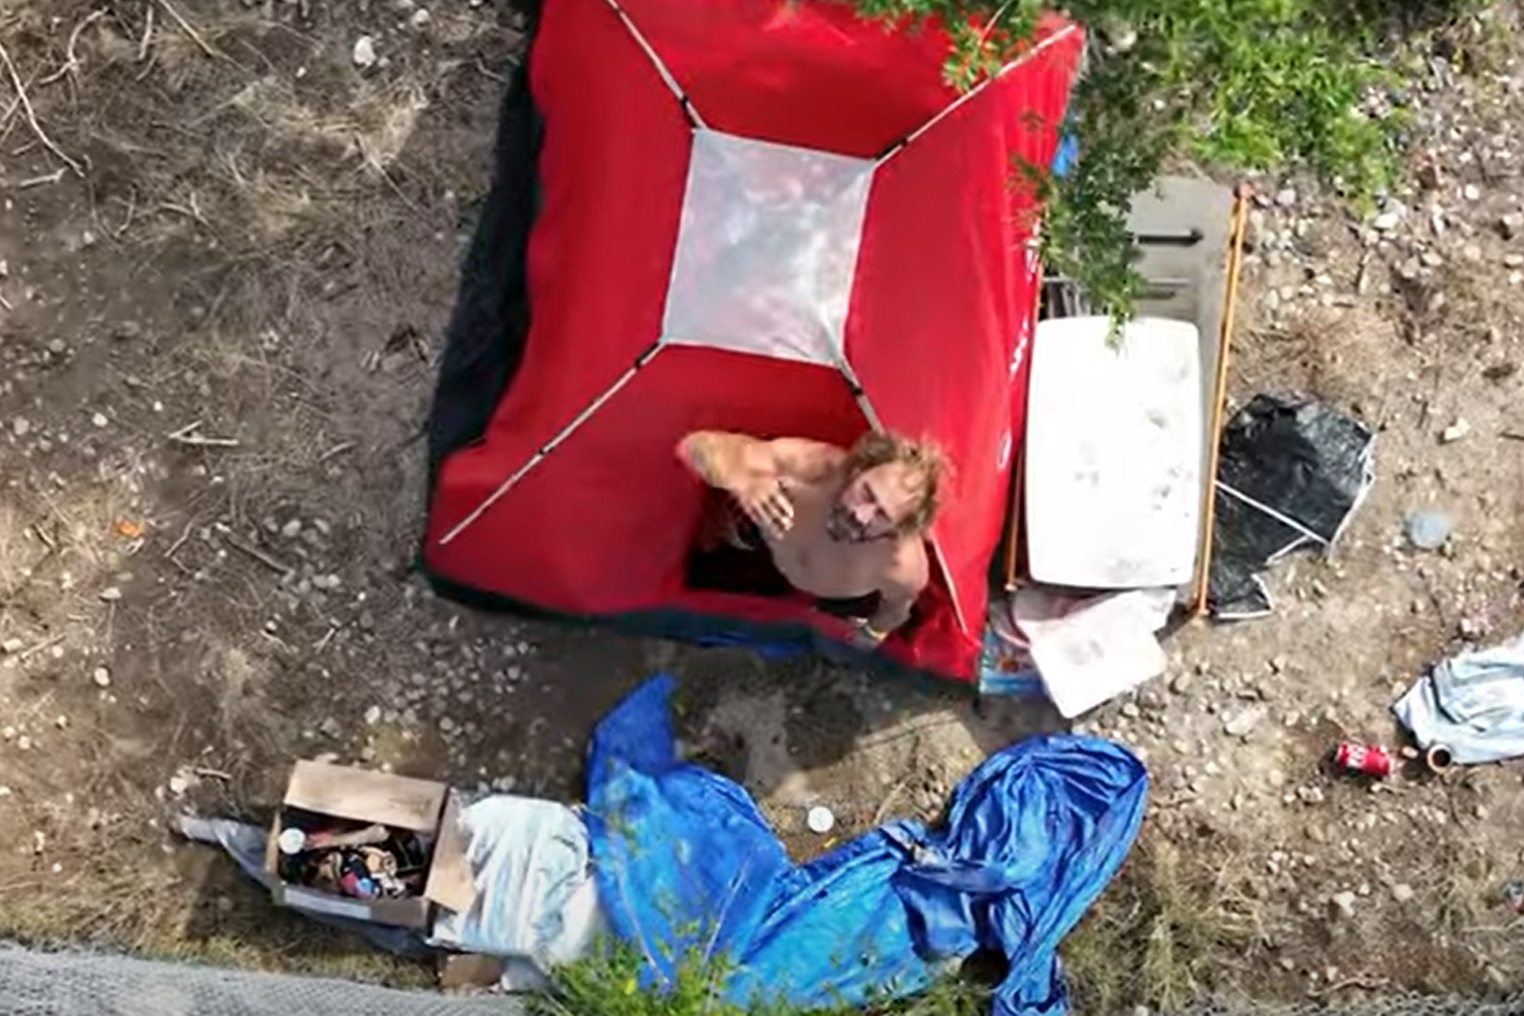 Pueblo man posts drone videos of homeless on social media